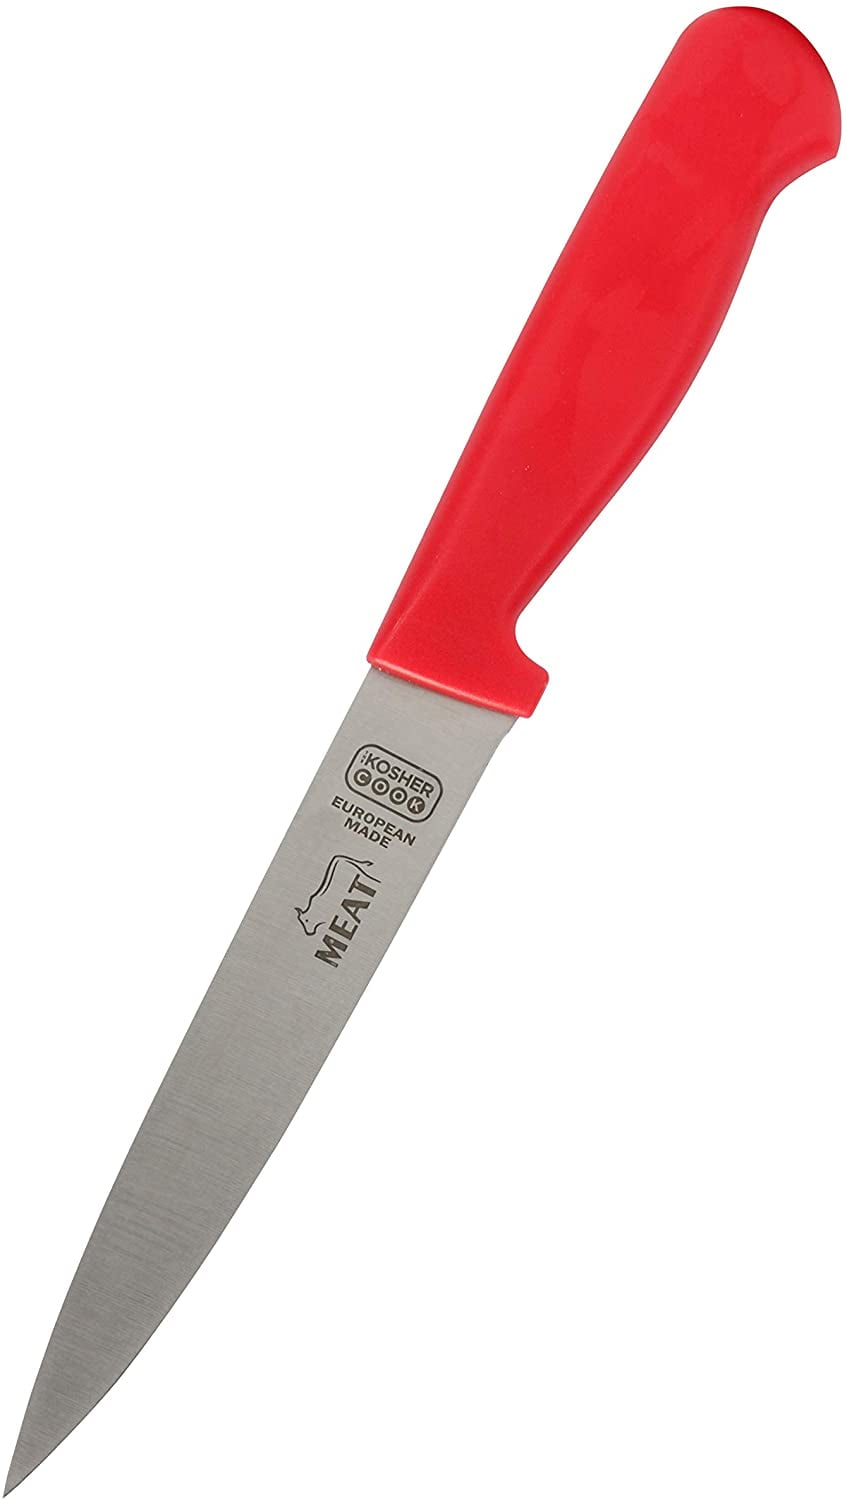 Details about   KNIFE SHARPENER Ceramic Tungsten Kitchen Knives Blade Sharpening System Tool 